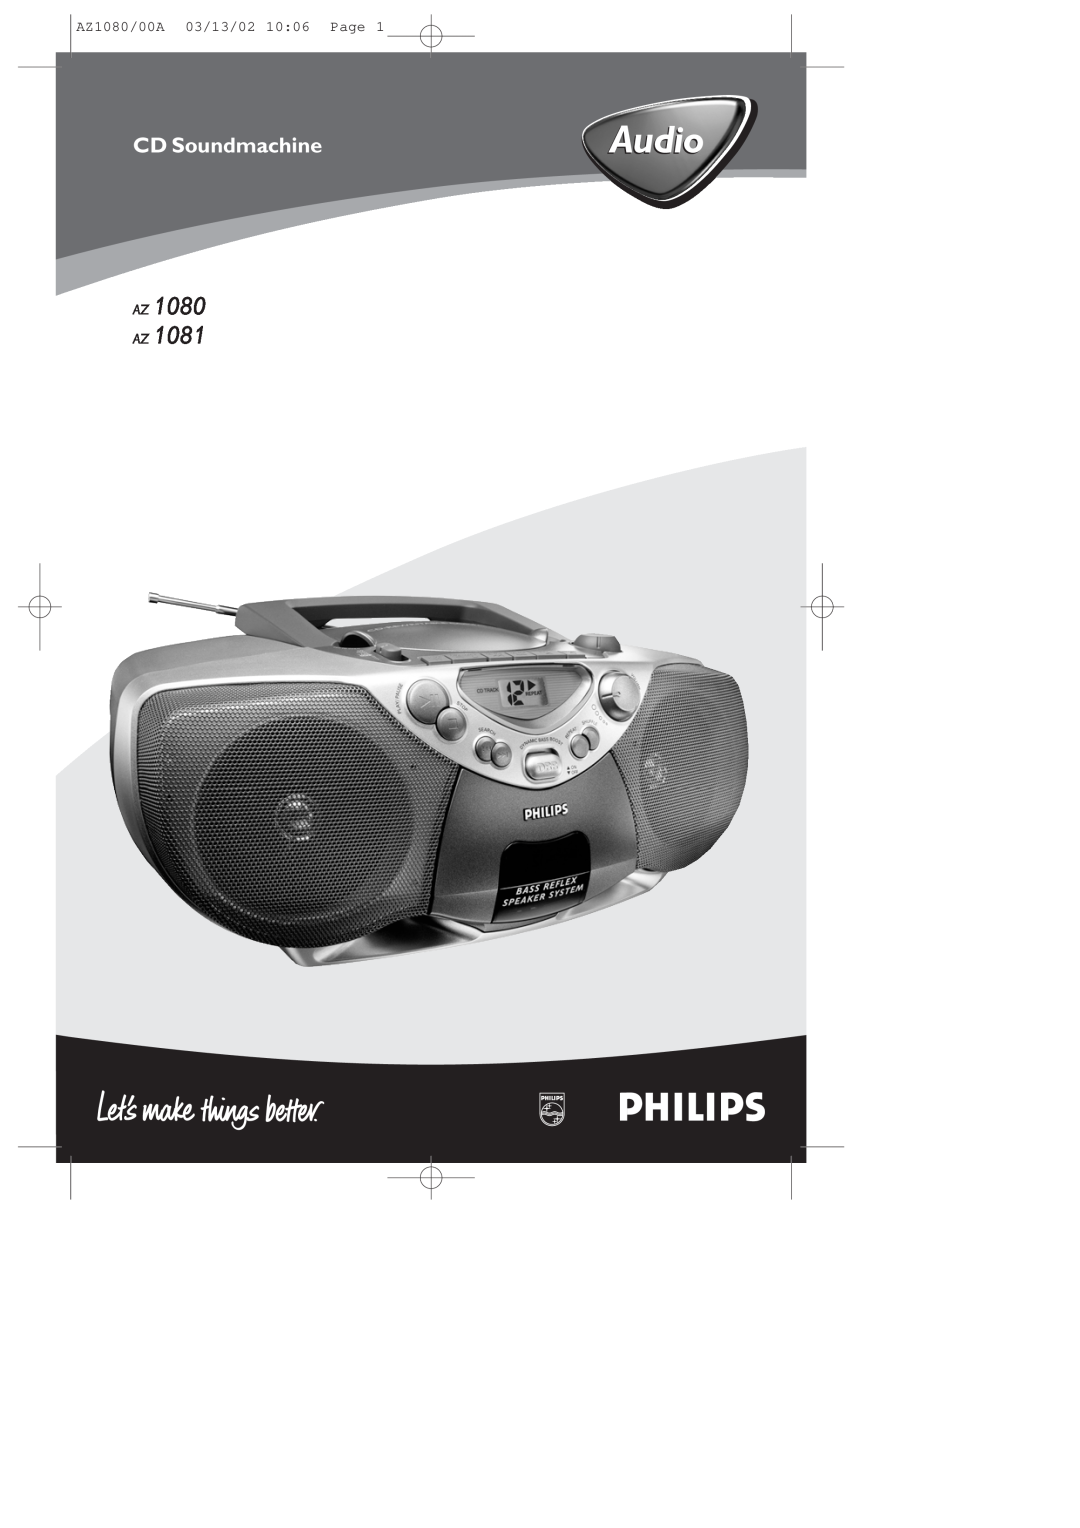 Philips manual Audio, Az Az, CD Soundmachine, AZ1080/00A 03/13/02 10 06 Page 